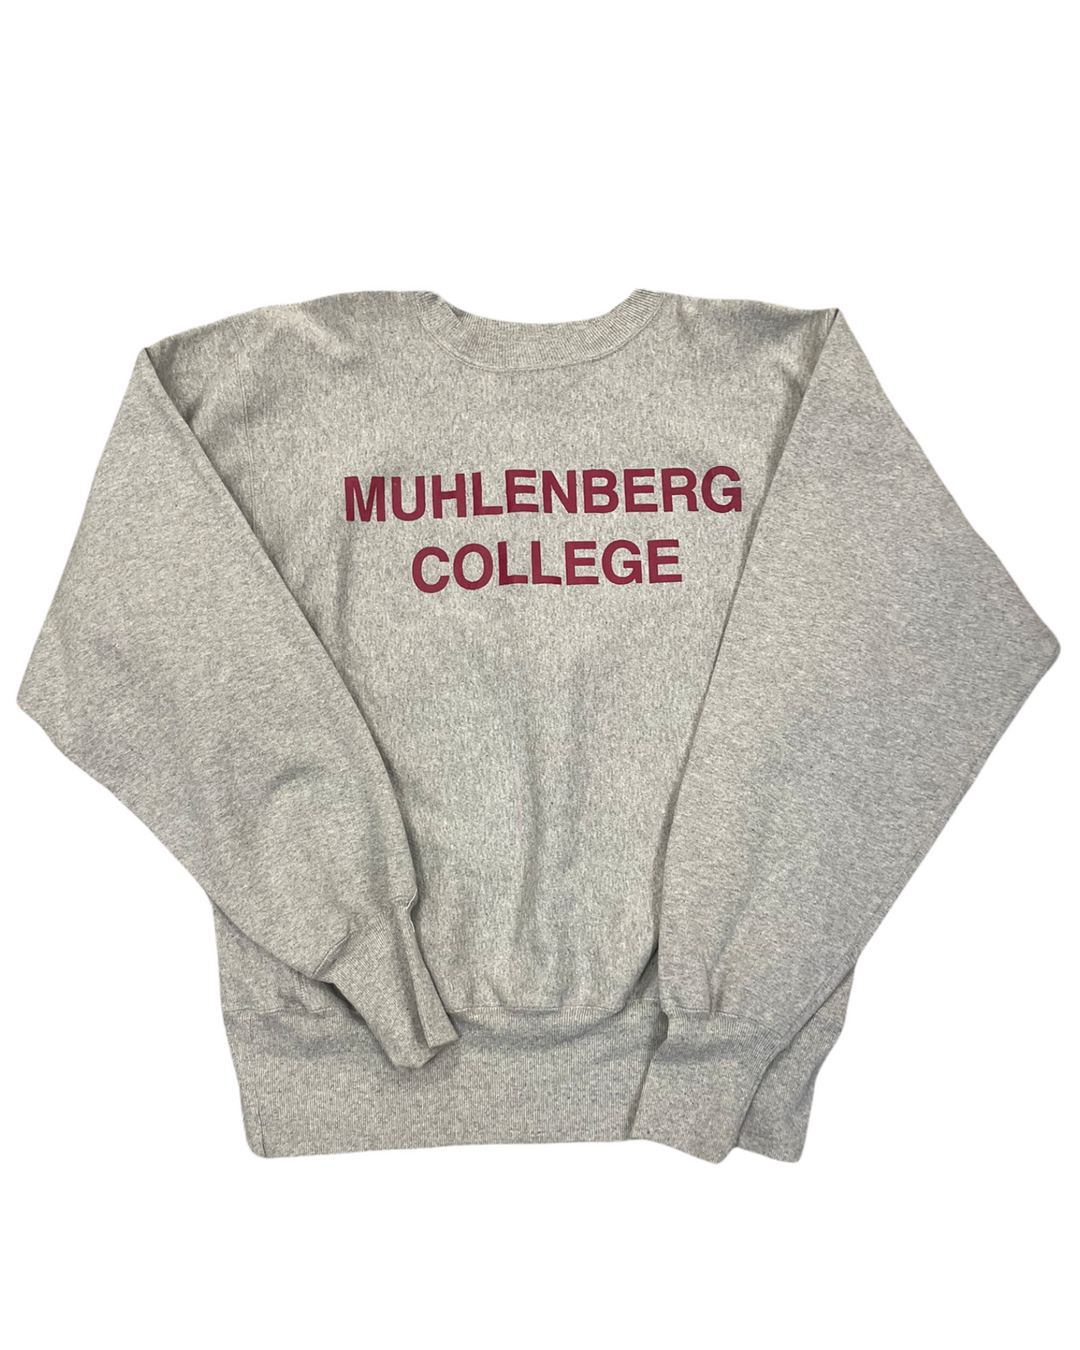 Muhlenberg Rare Vintage Champion Sweatshirt